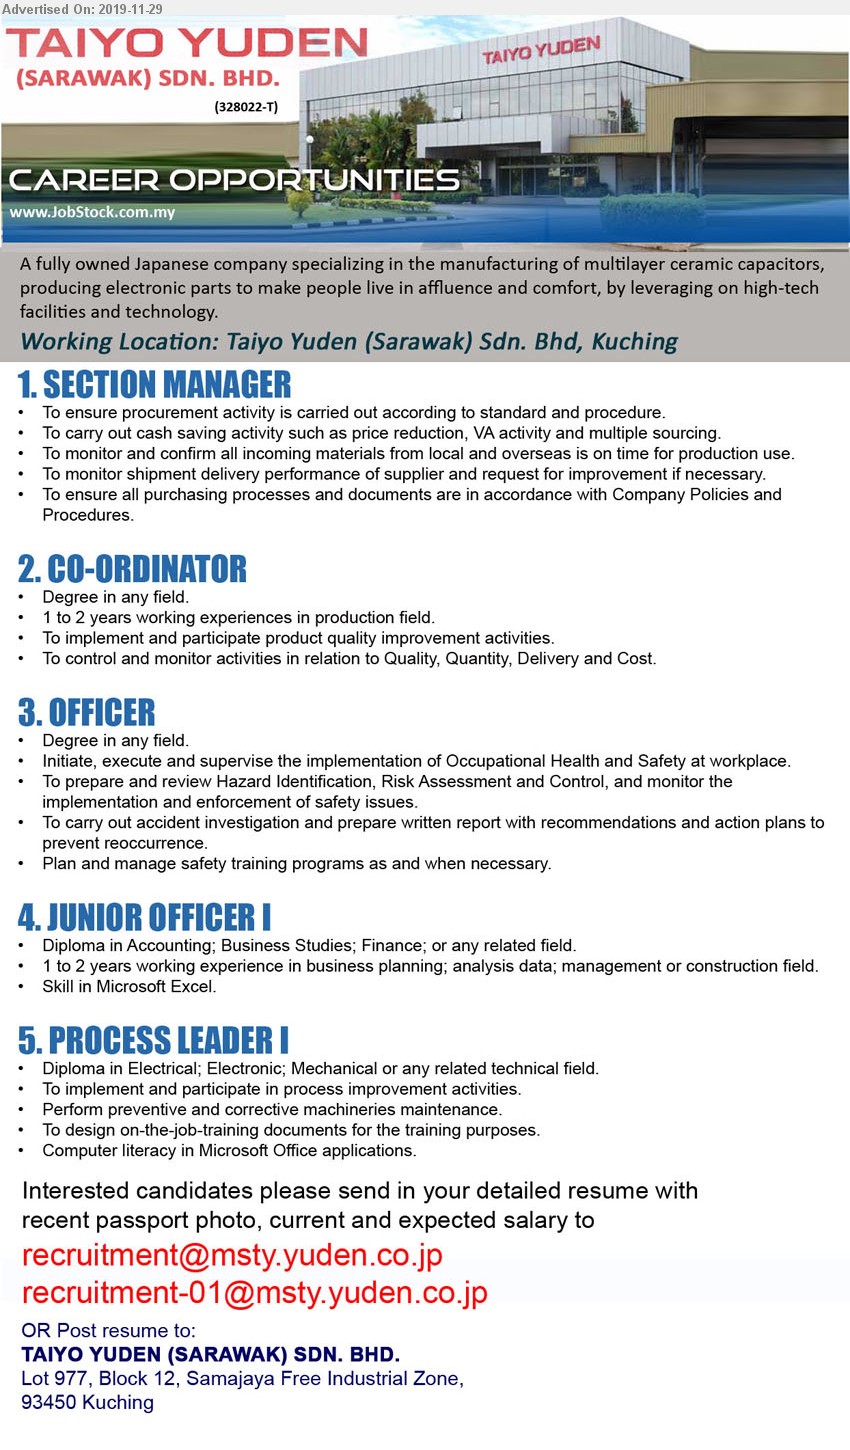 Sarawak Job Vacancy 2020 - mowmalay